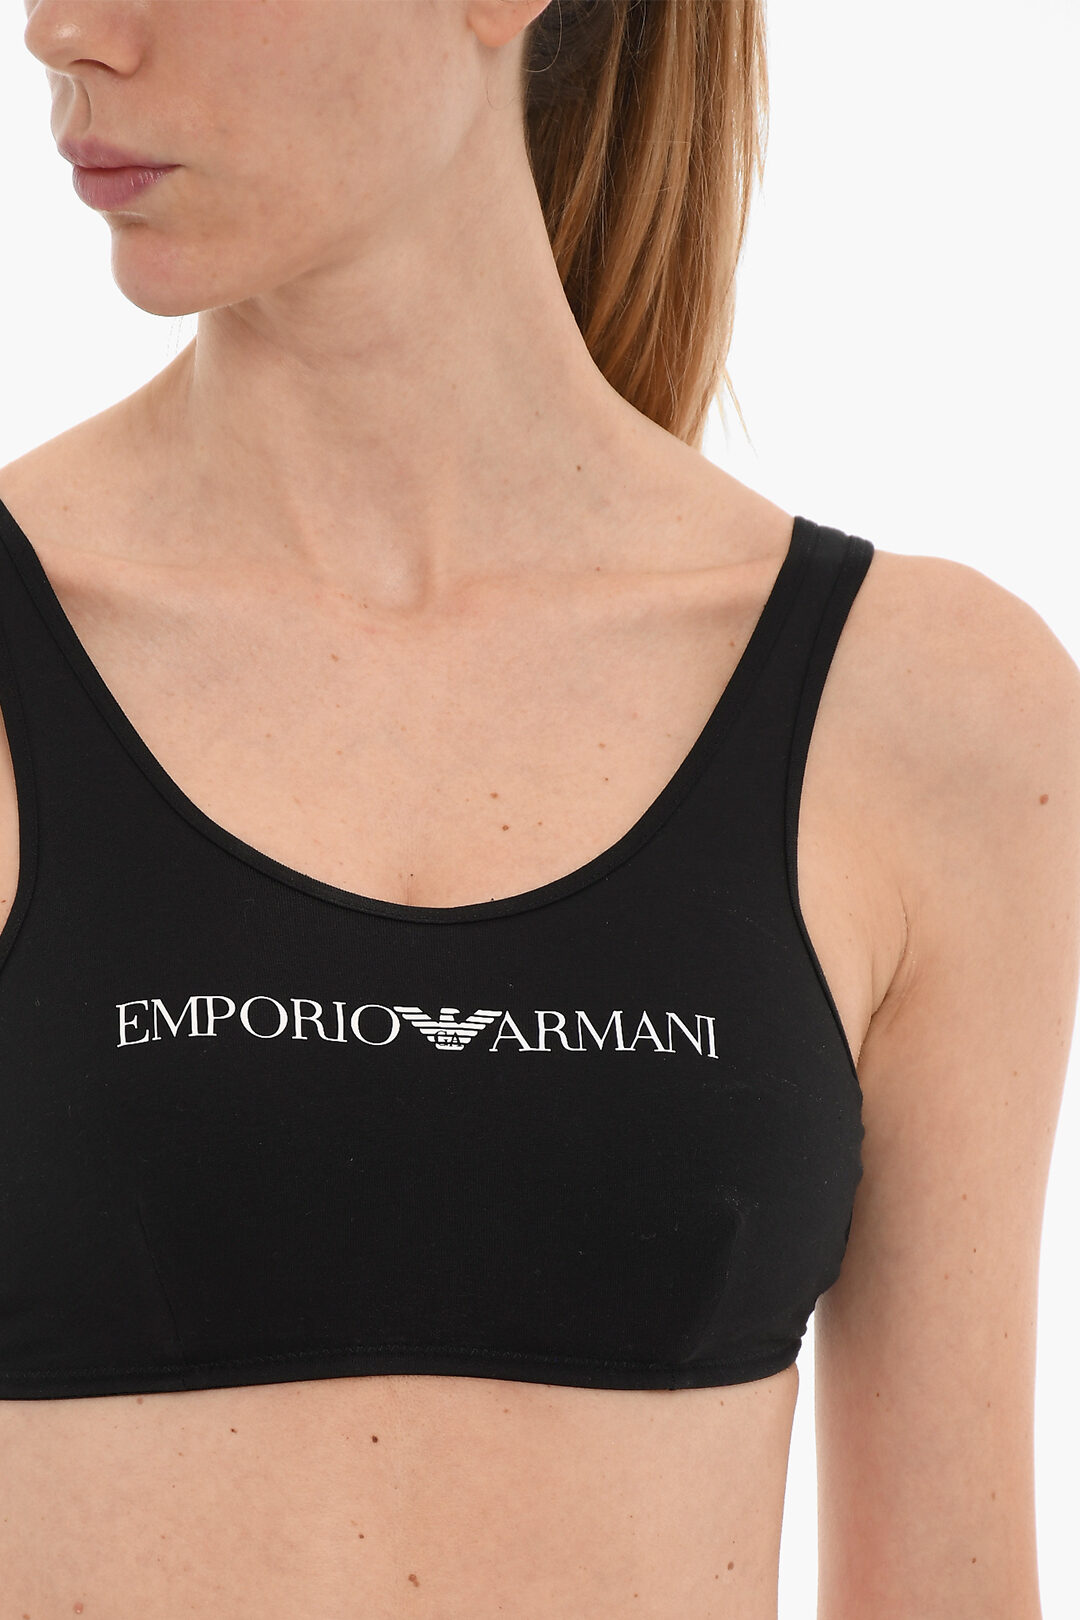 Emporio Armani Women's Logo Bra